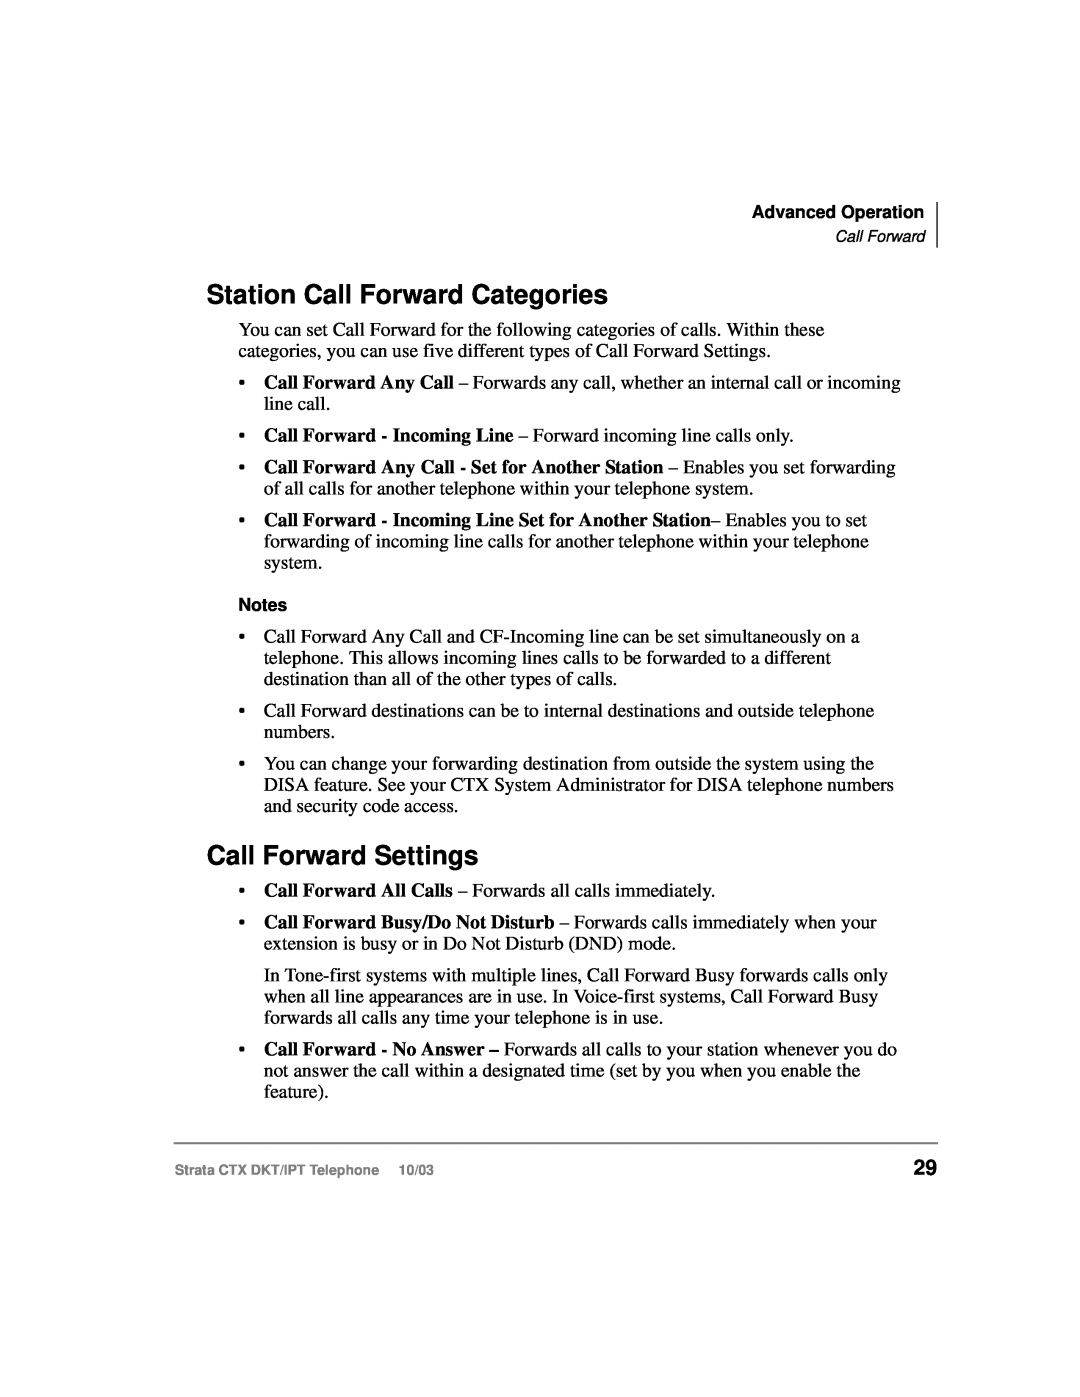 Toshiba DKT, IPT manual Station Call Forward Categories, Call Forward Settings 